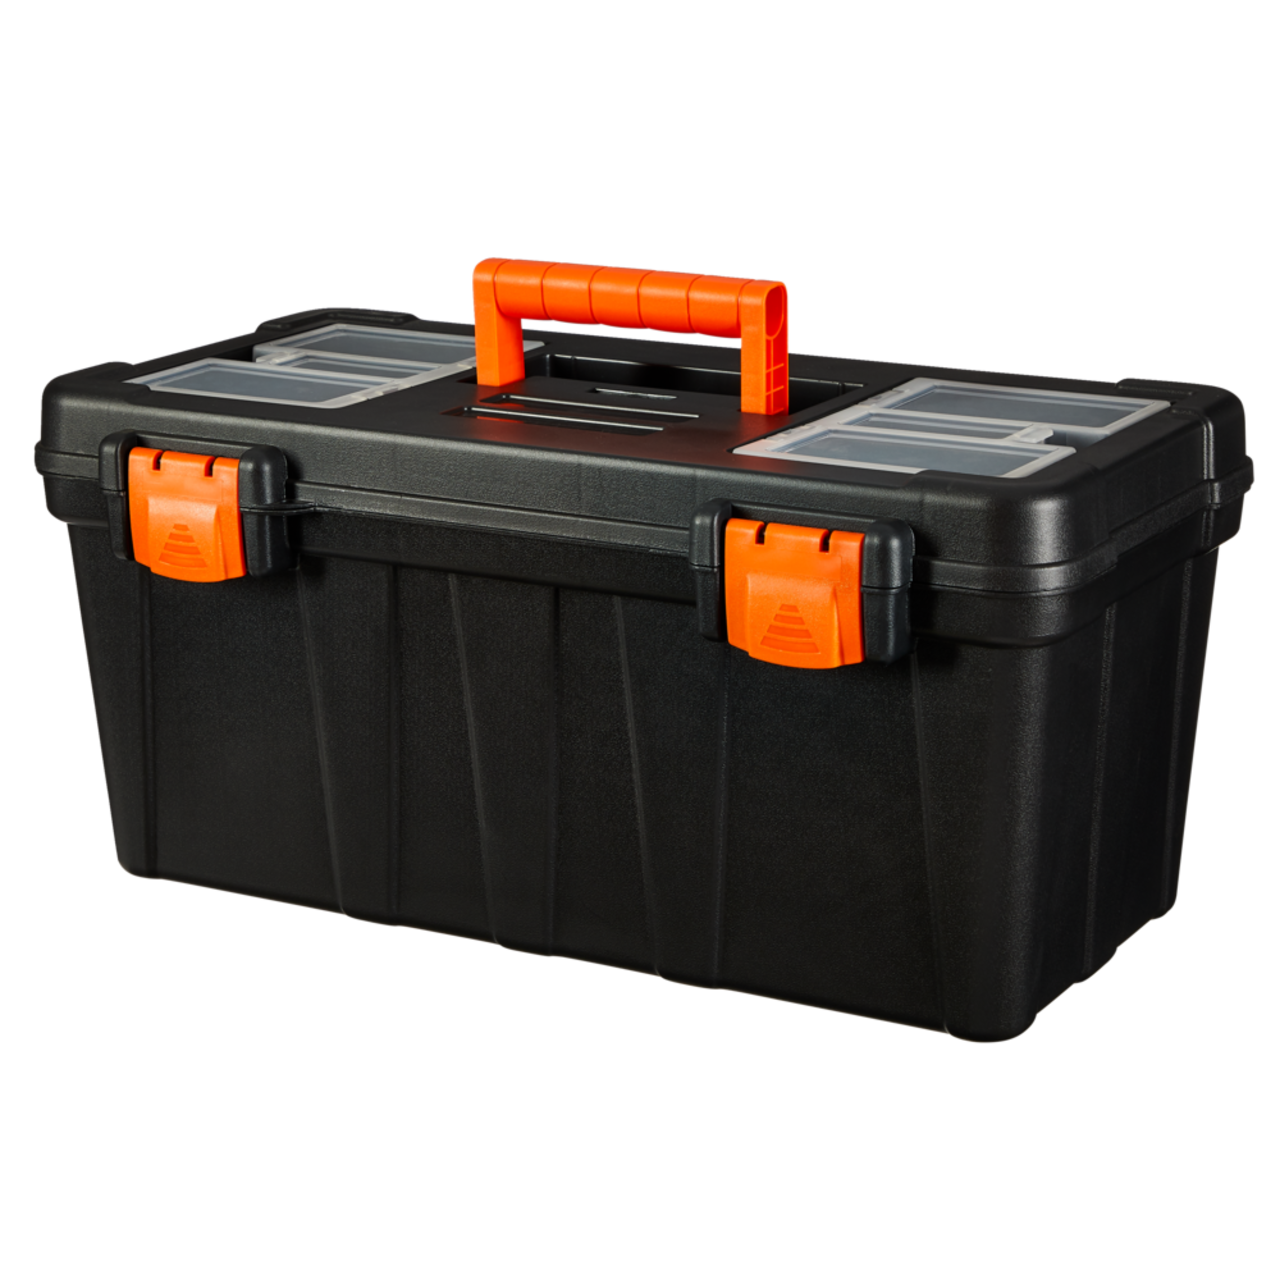 Extra-large rugged plastic tool box - Brady Part: LKP-TKLBOX